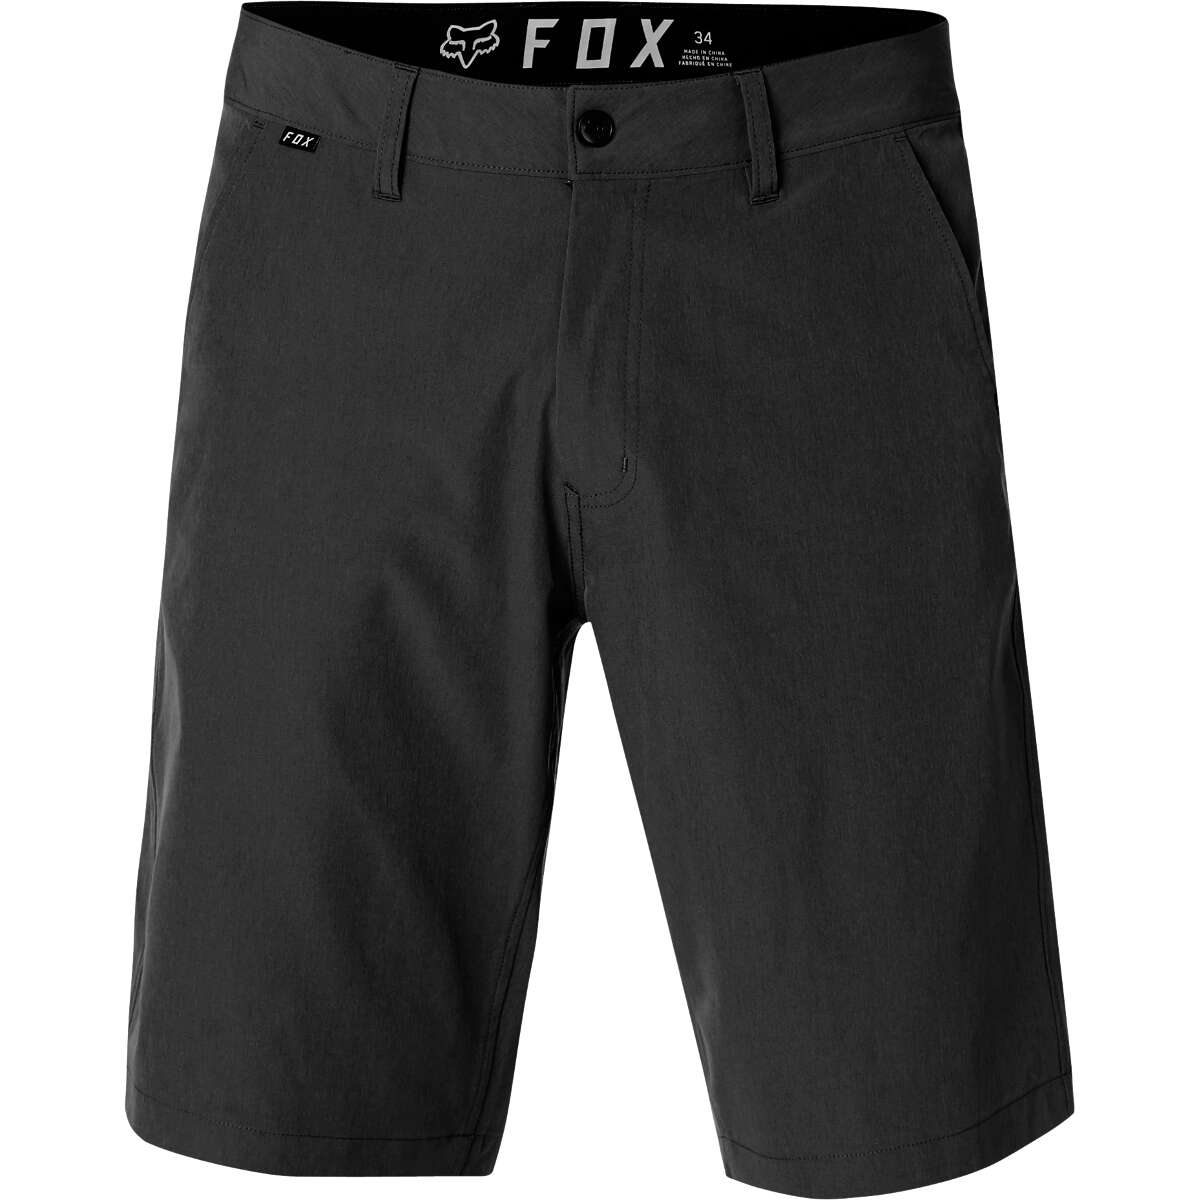 Fox Short Essex Tech Stretch Black